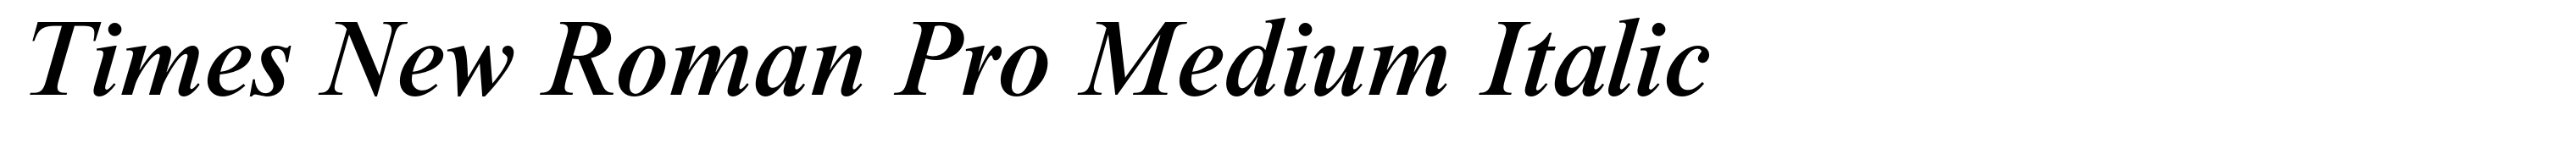 Times New Roman Pro Medium Italic